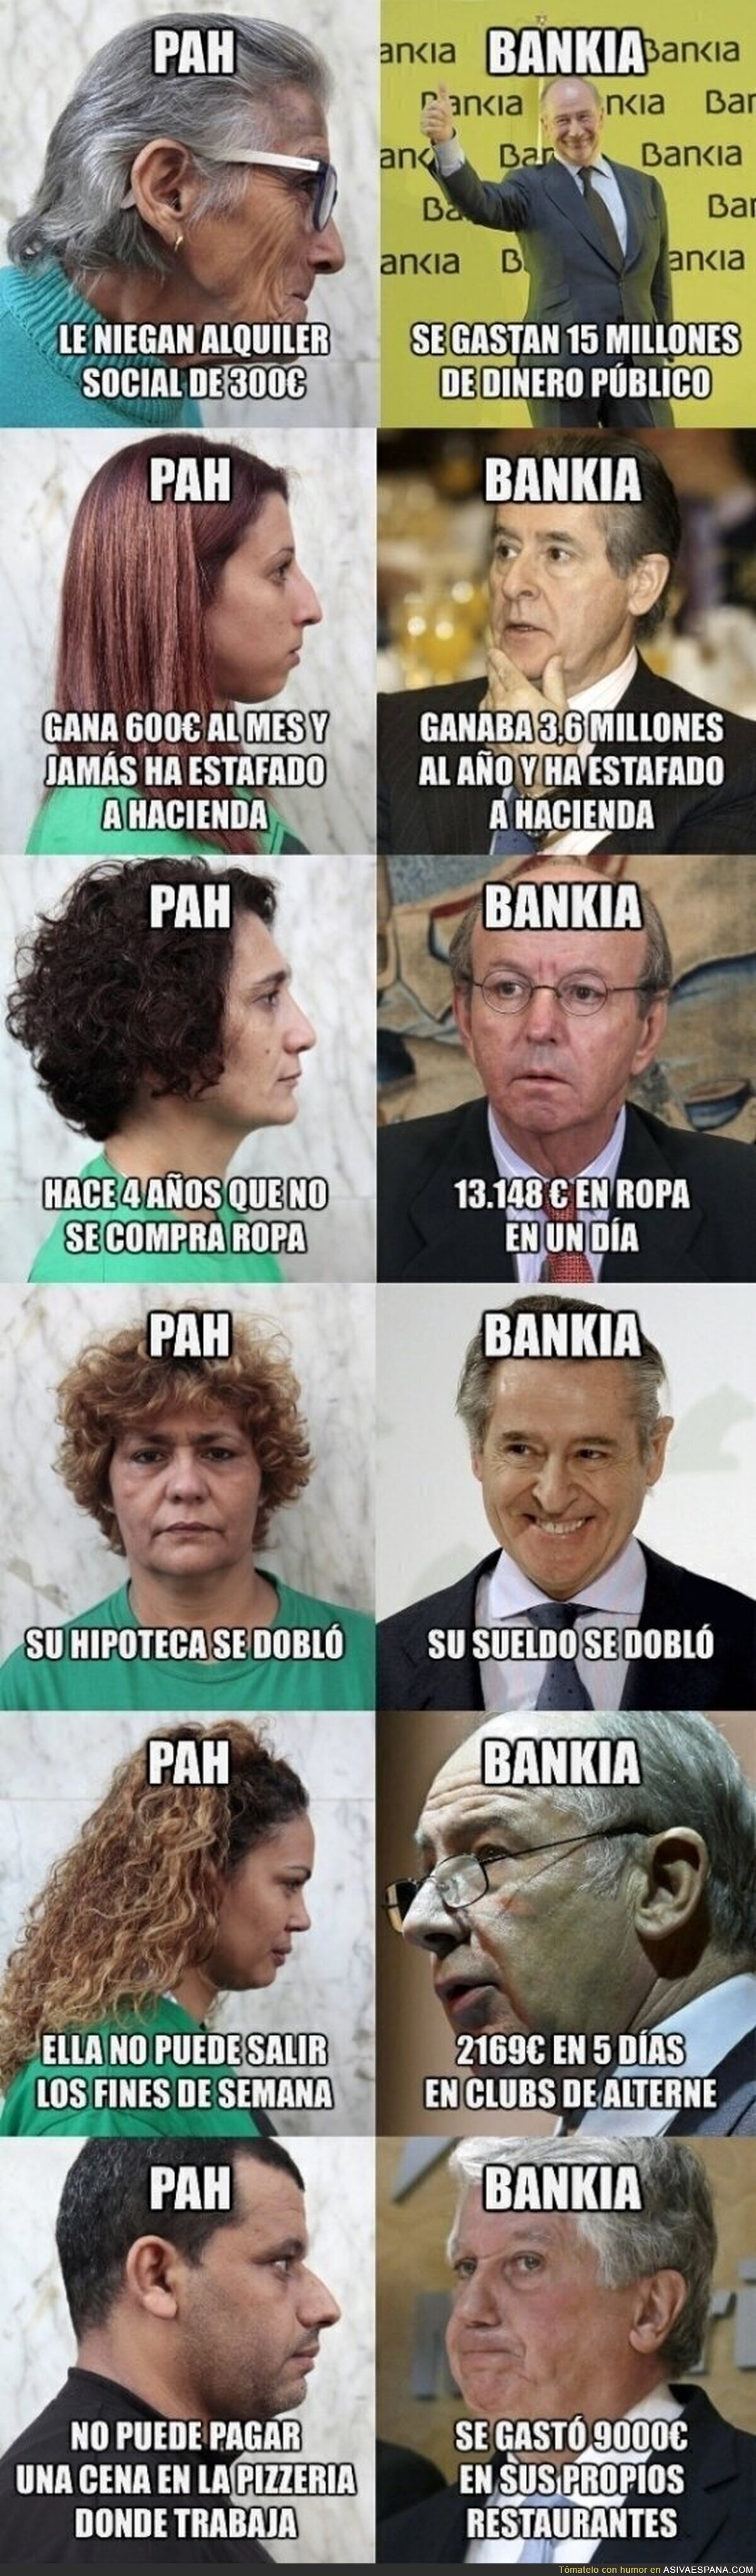 Plataforma Afectados por la Hipoteca vs Bankia - La tomadura de pelo de Bankia en seis memes de la P